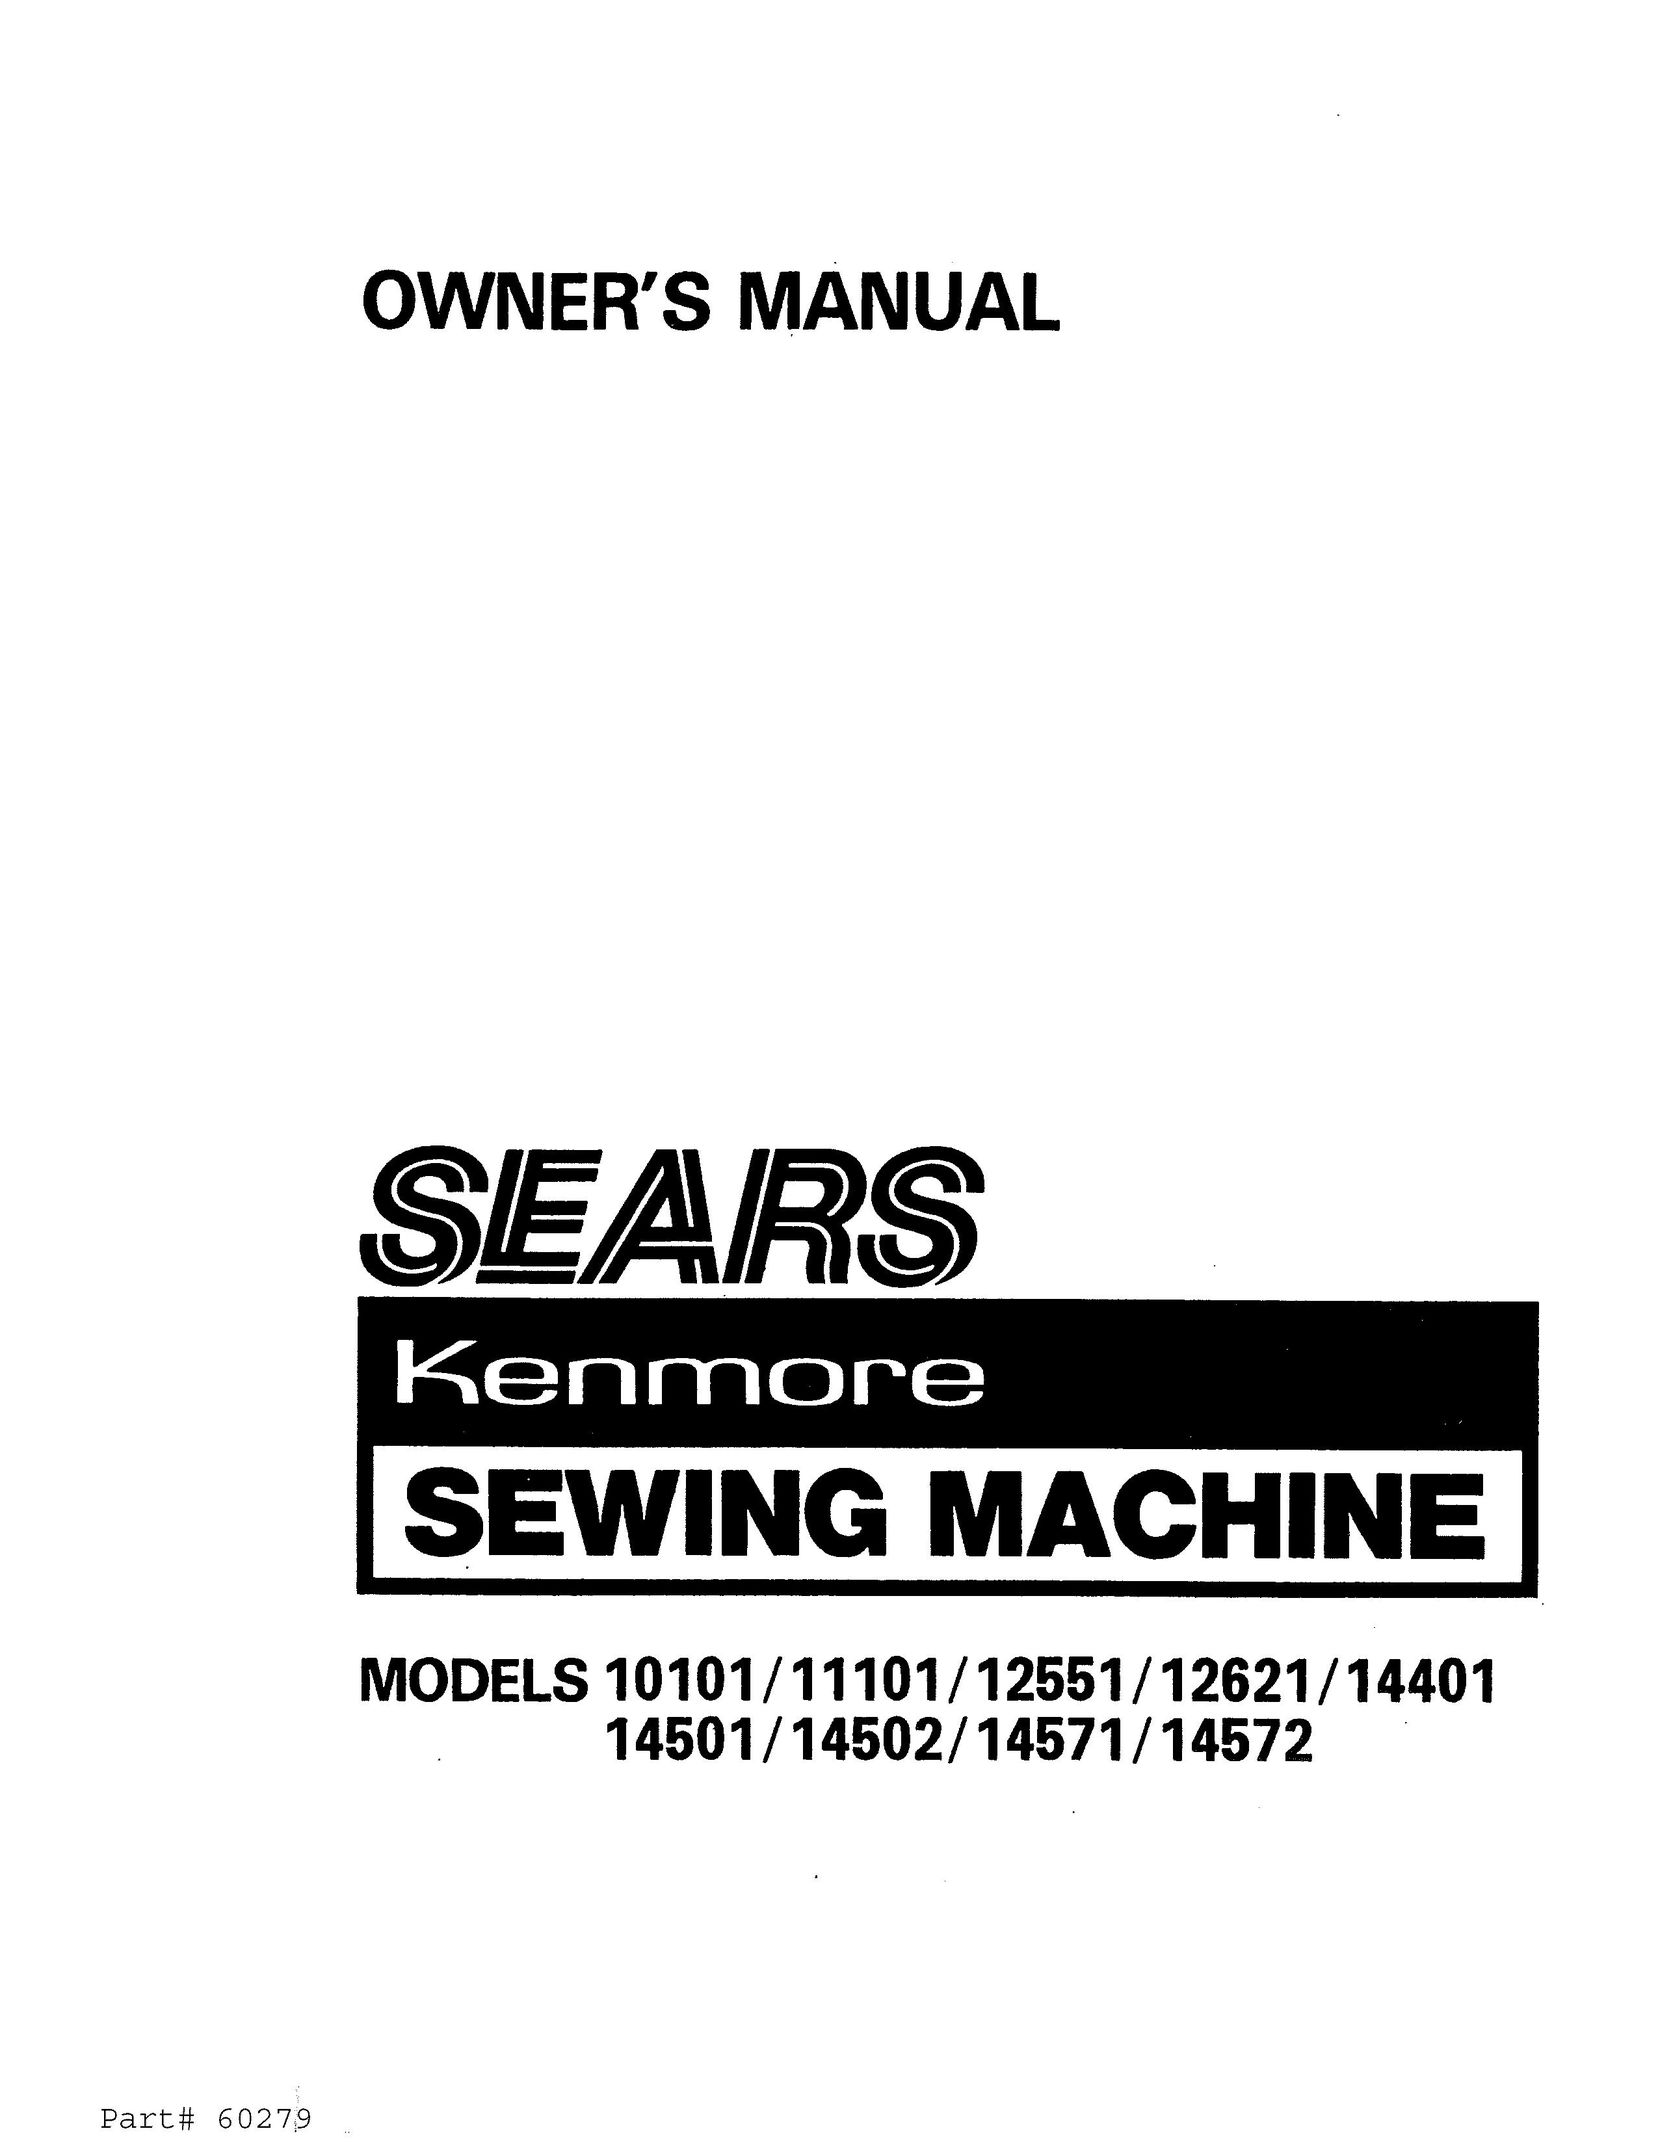 Kenmore 14502 Sewing Machine User Manual